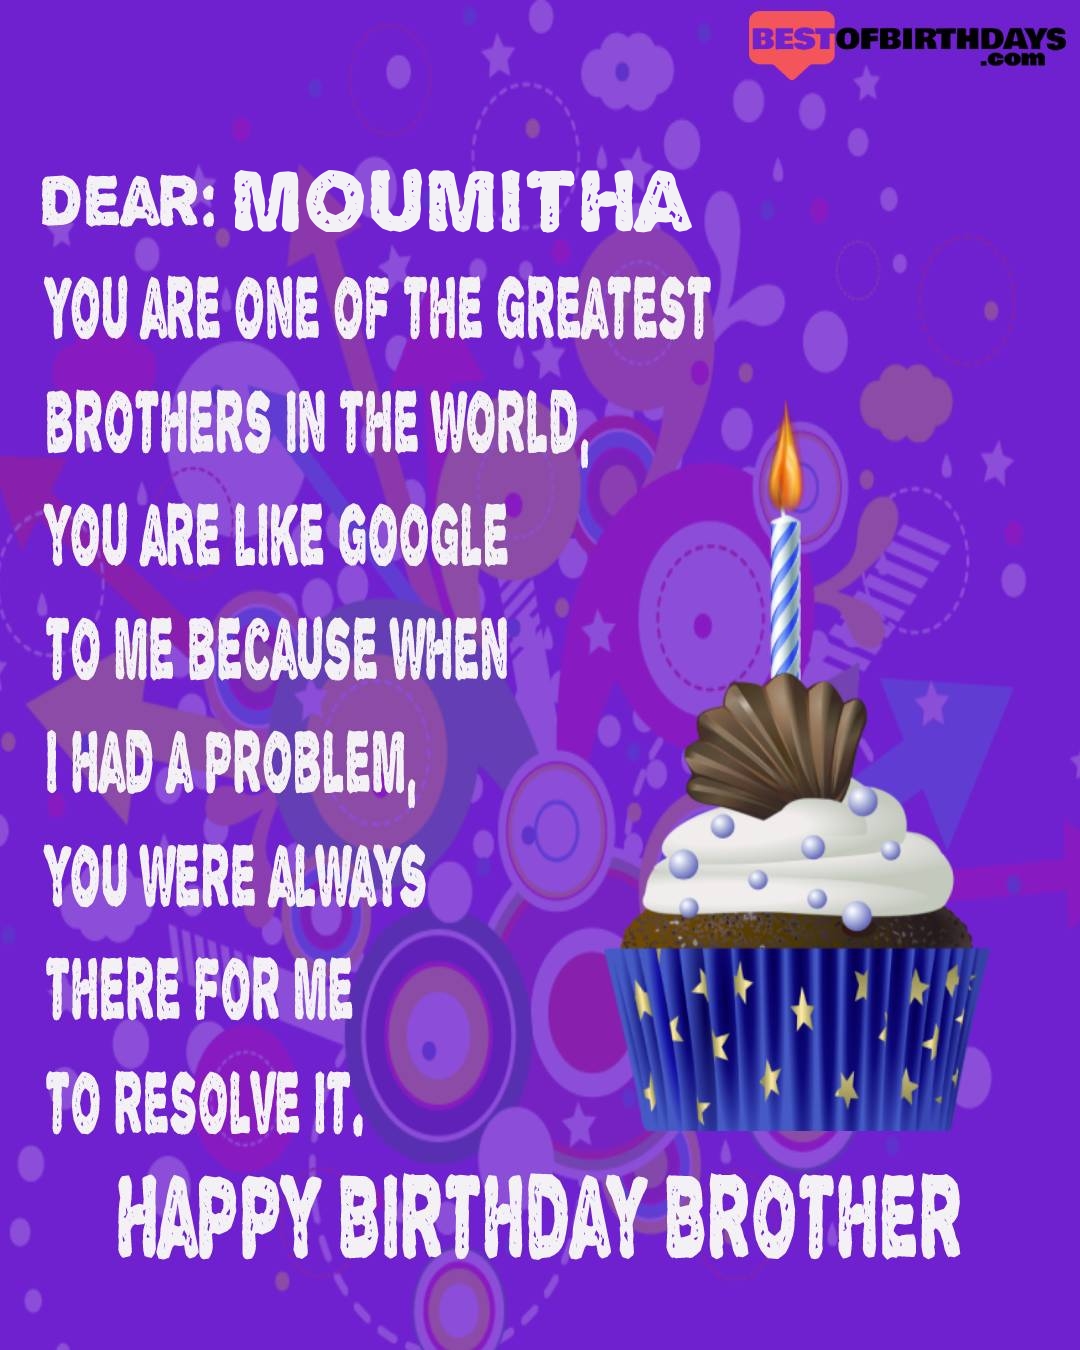 Happy birthday moumitha bhai brother bro